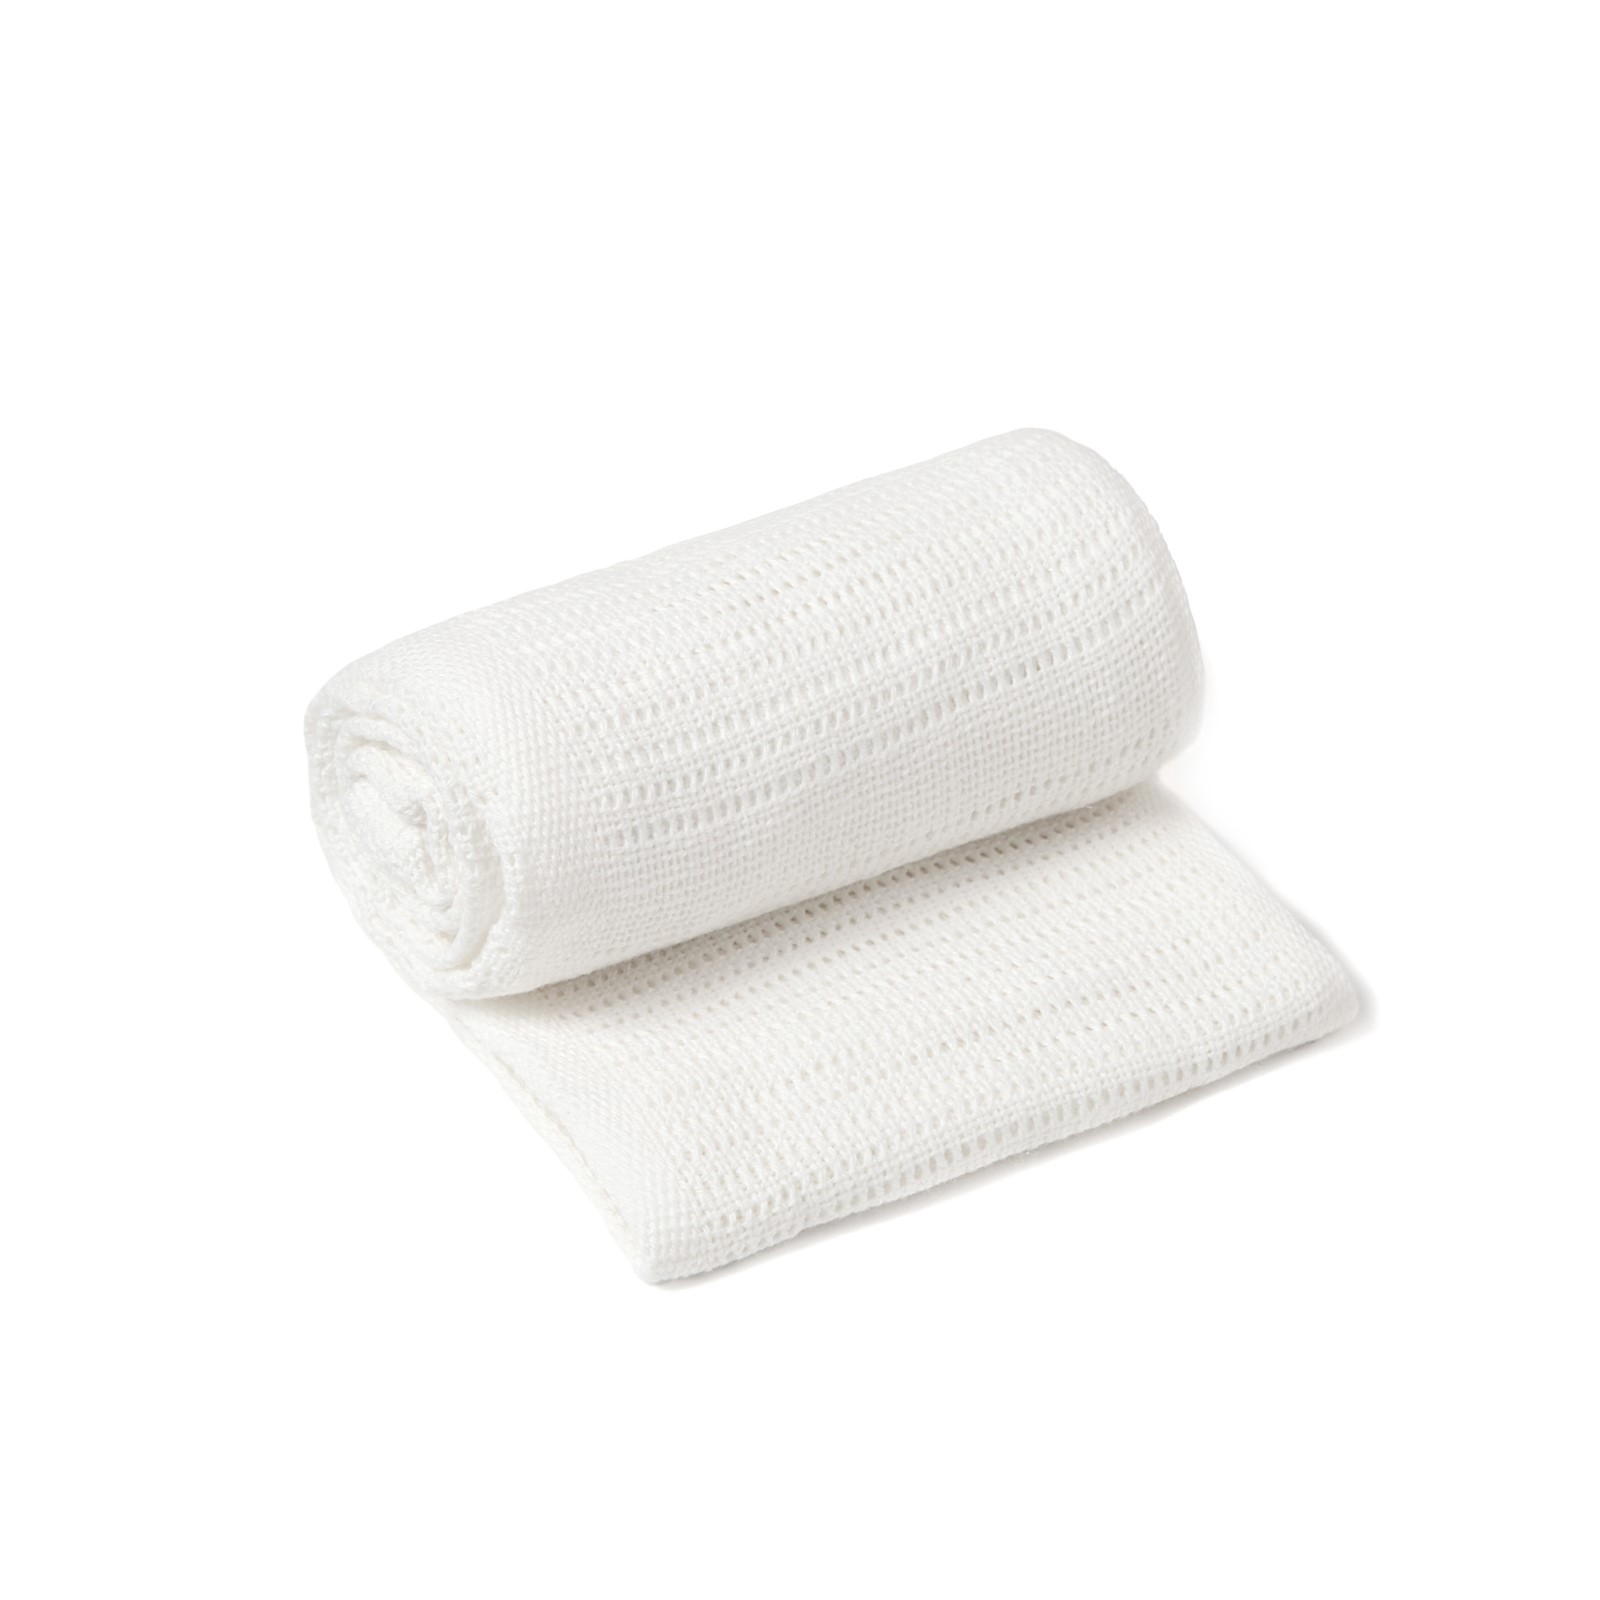 Soft Cotton Pram/Moses Basket/Crib Cellular Blanket - White